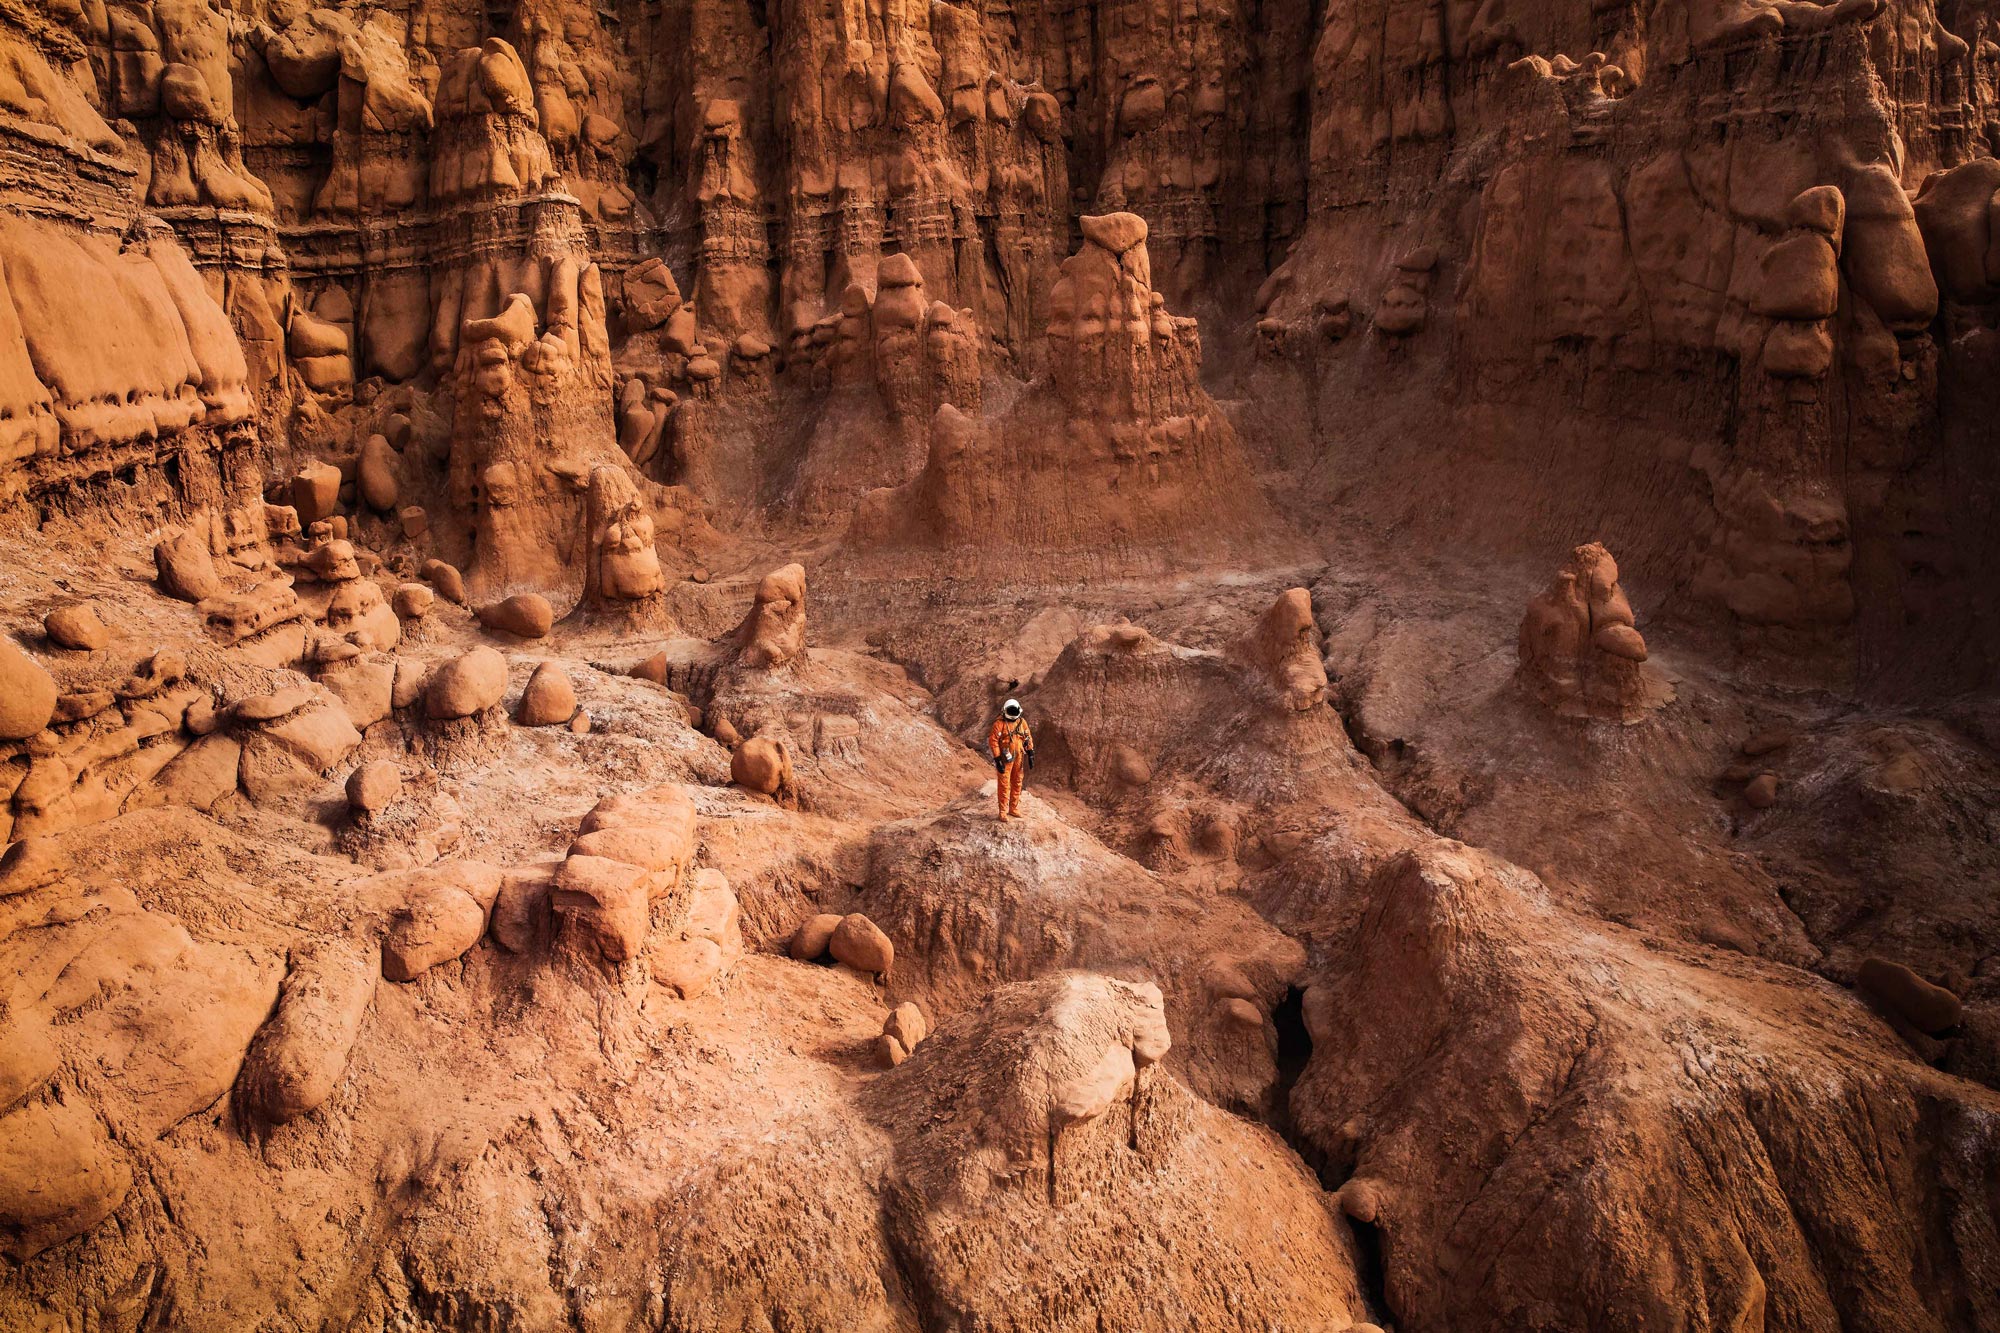 An astronaut walks through the otherworldly landscape of the Arizona desert.